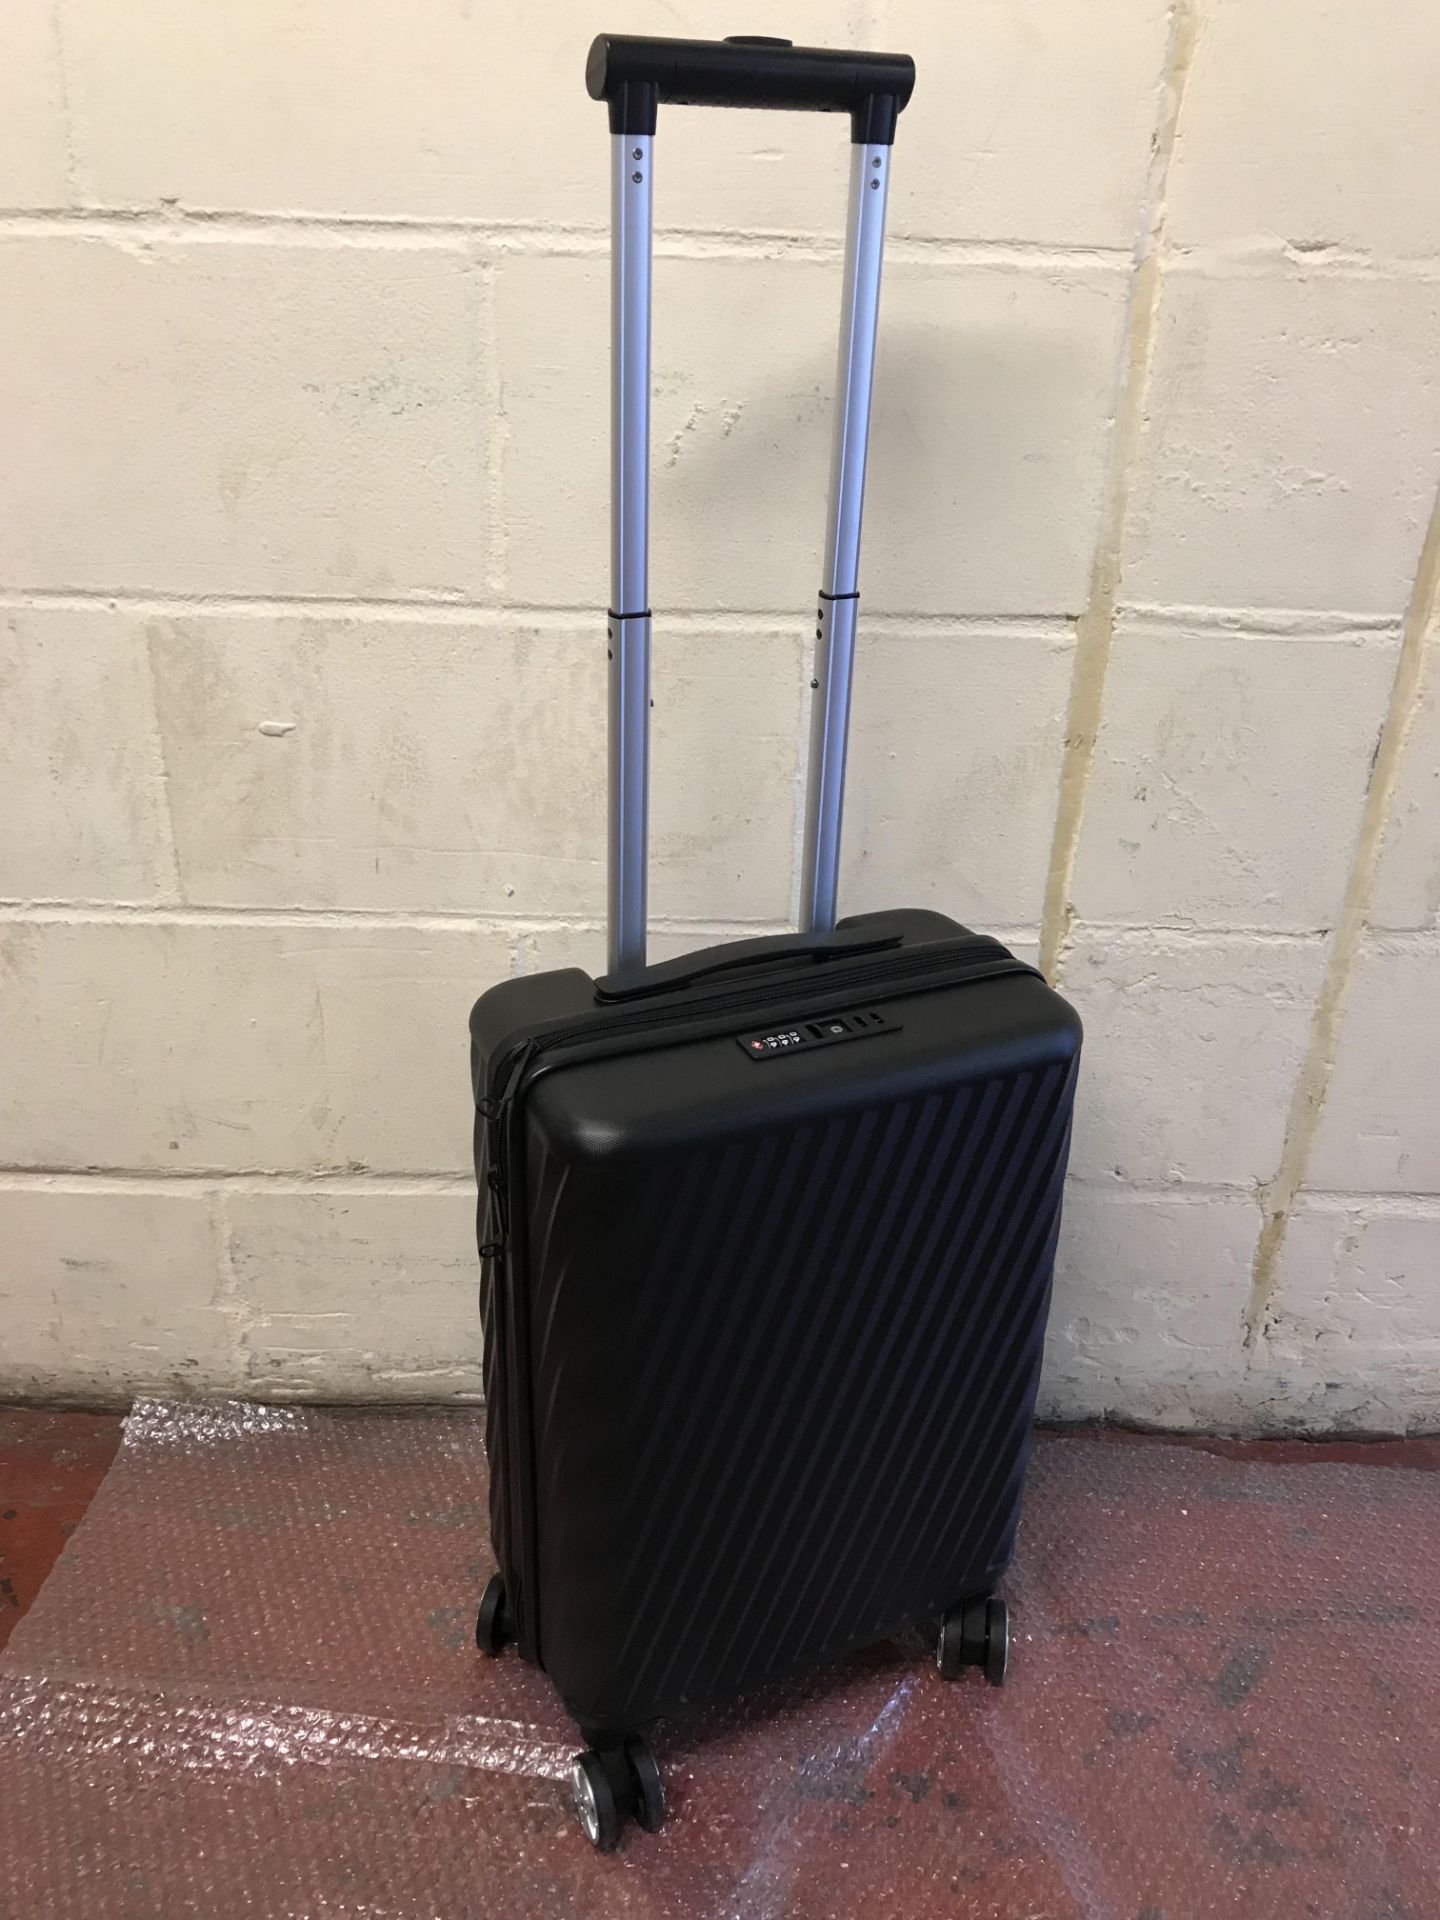 Cabin 4 Wheel Ultralight Hard Suitcase with Security Zip RRP £99